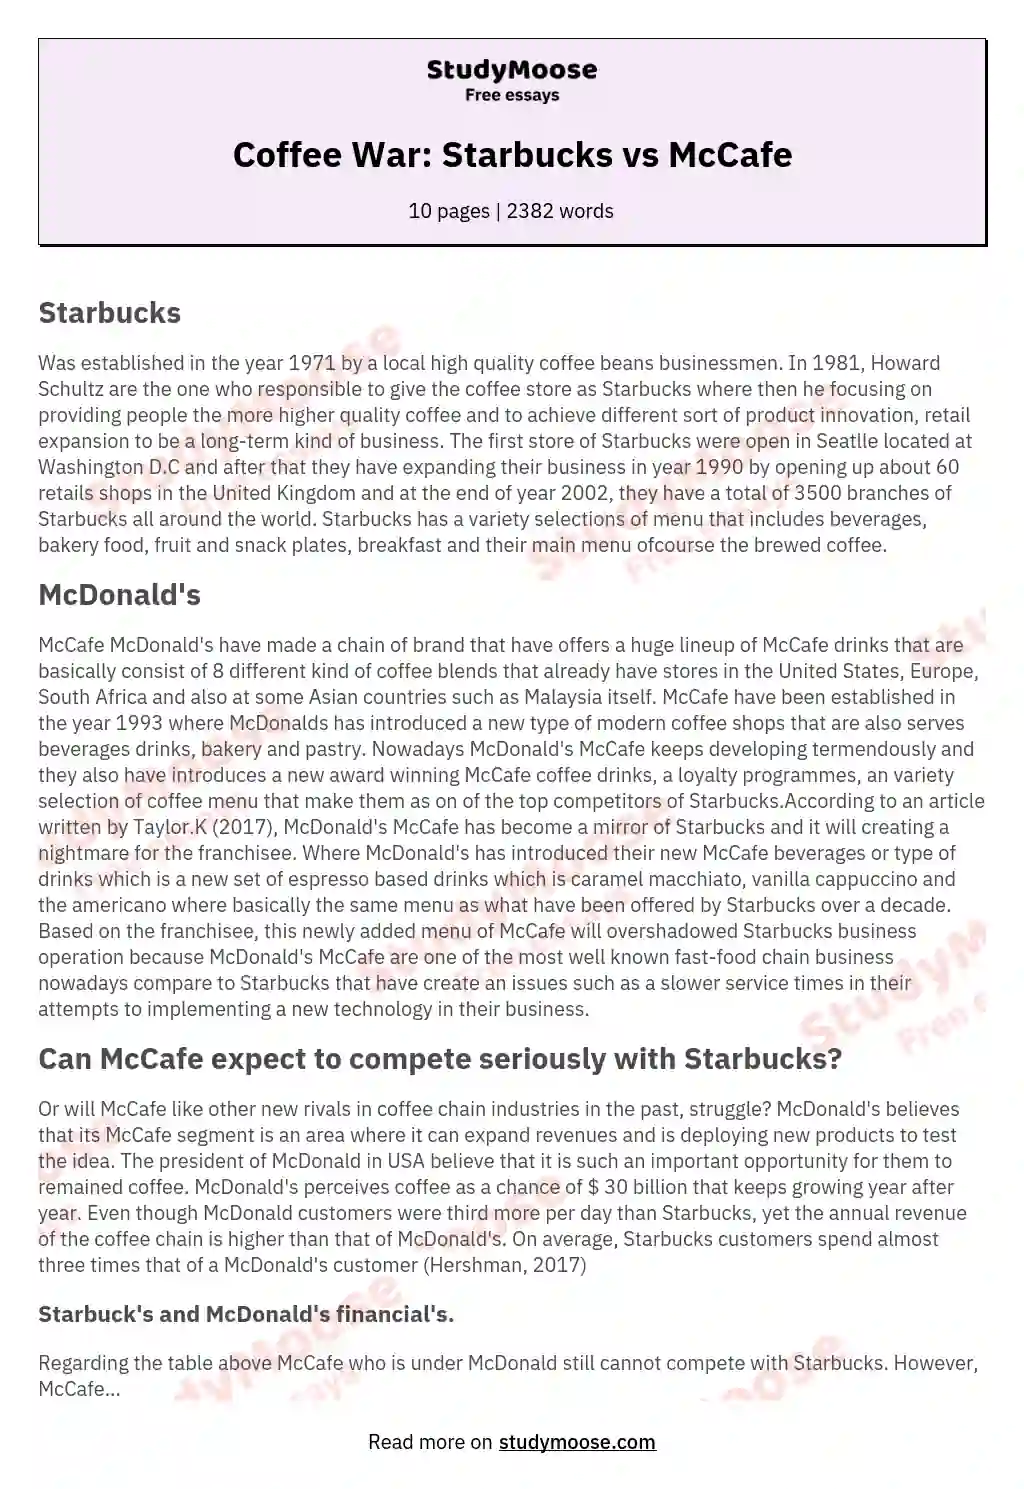 Coffee War: Starbucks vs McCafe